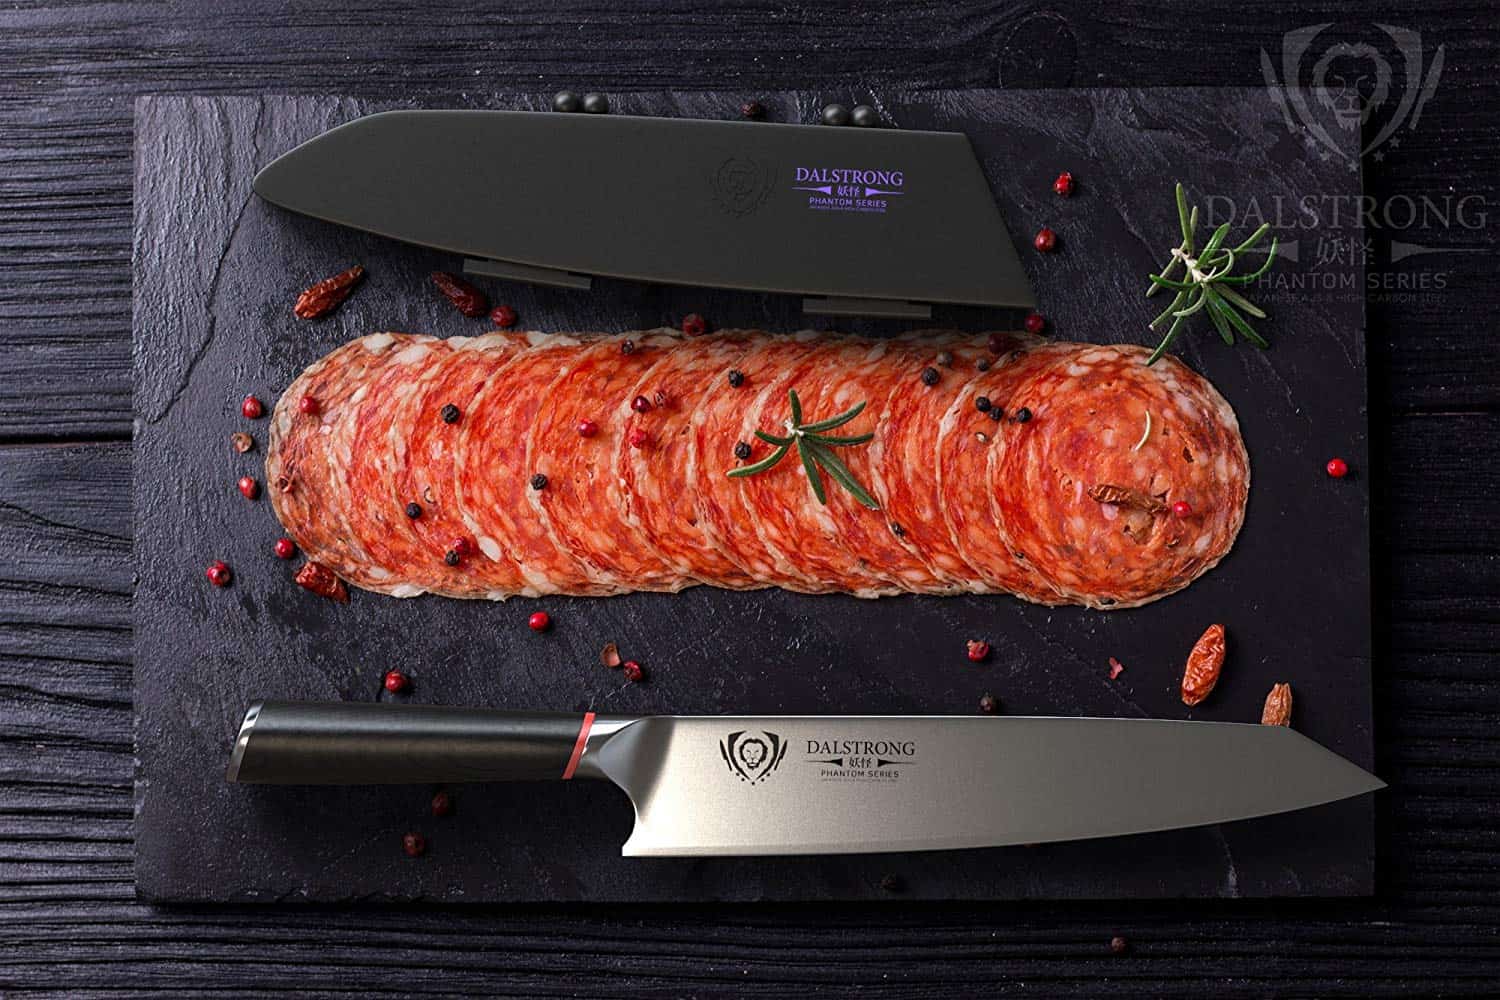 Dalstrong Japanese teppanyaki knife